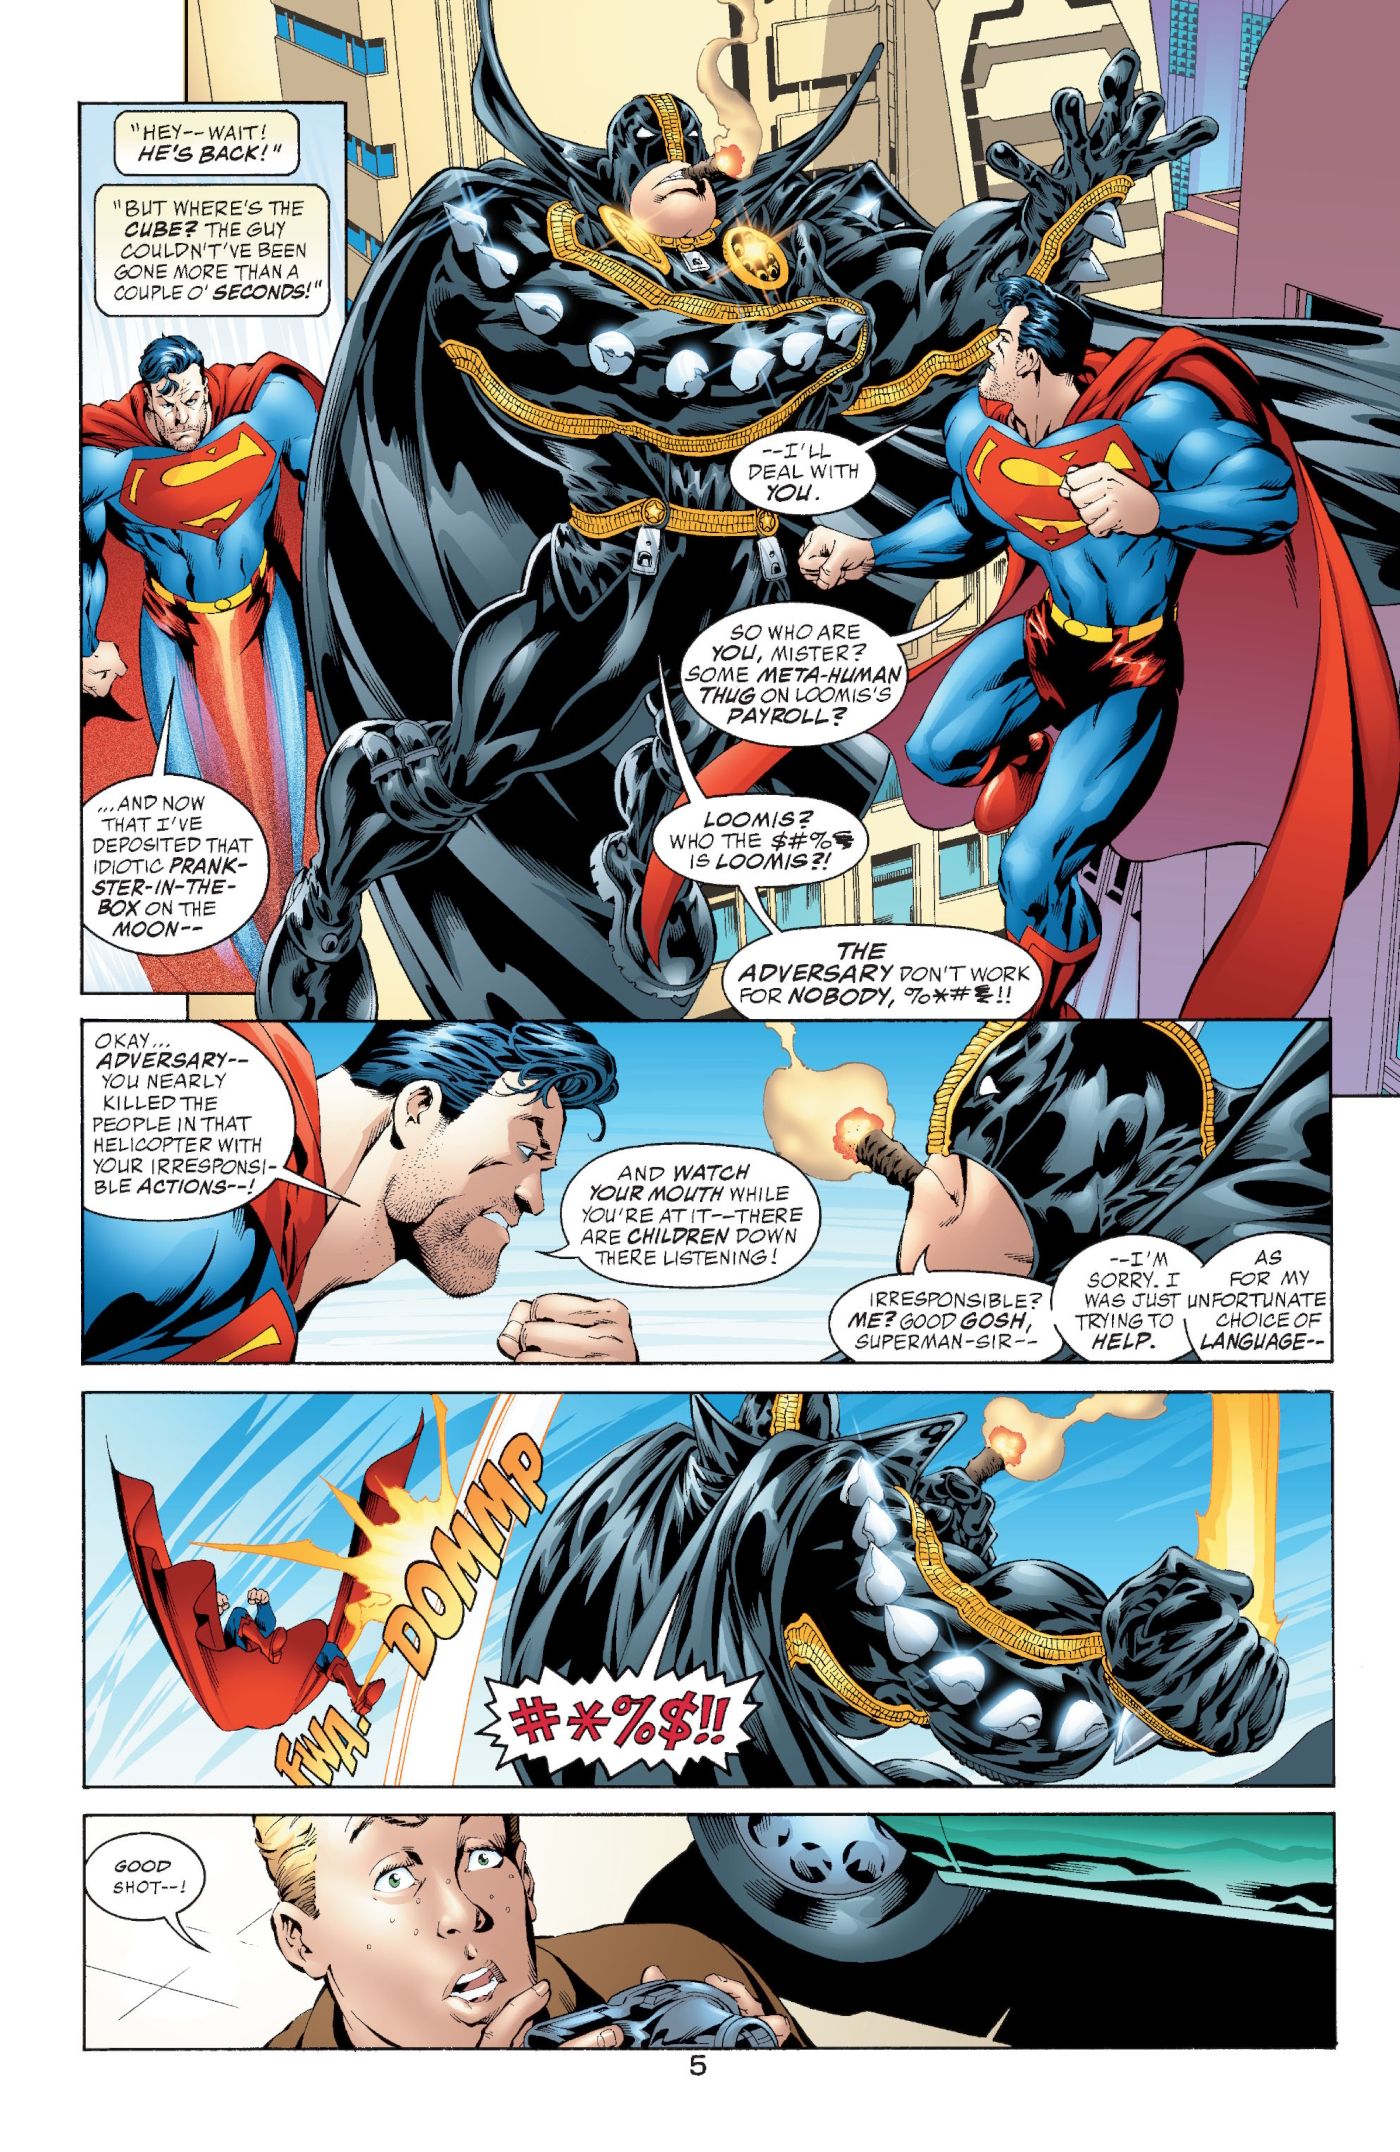 superman confronts his enemy